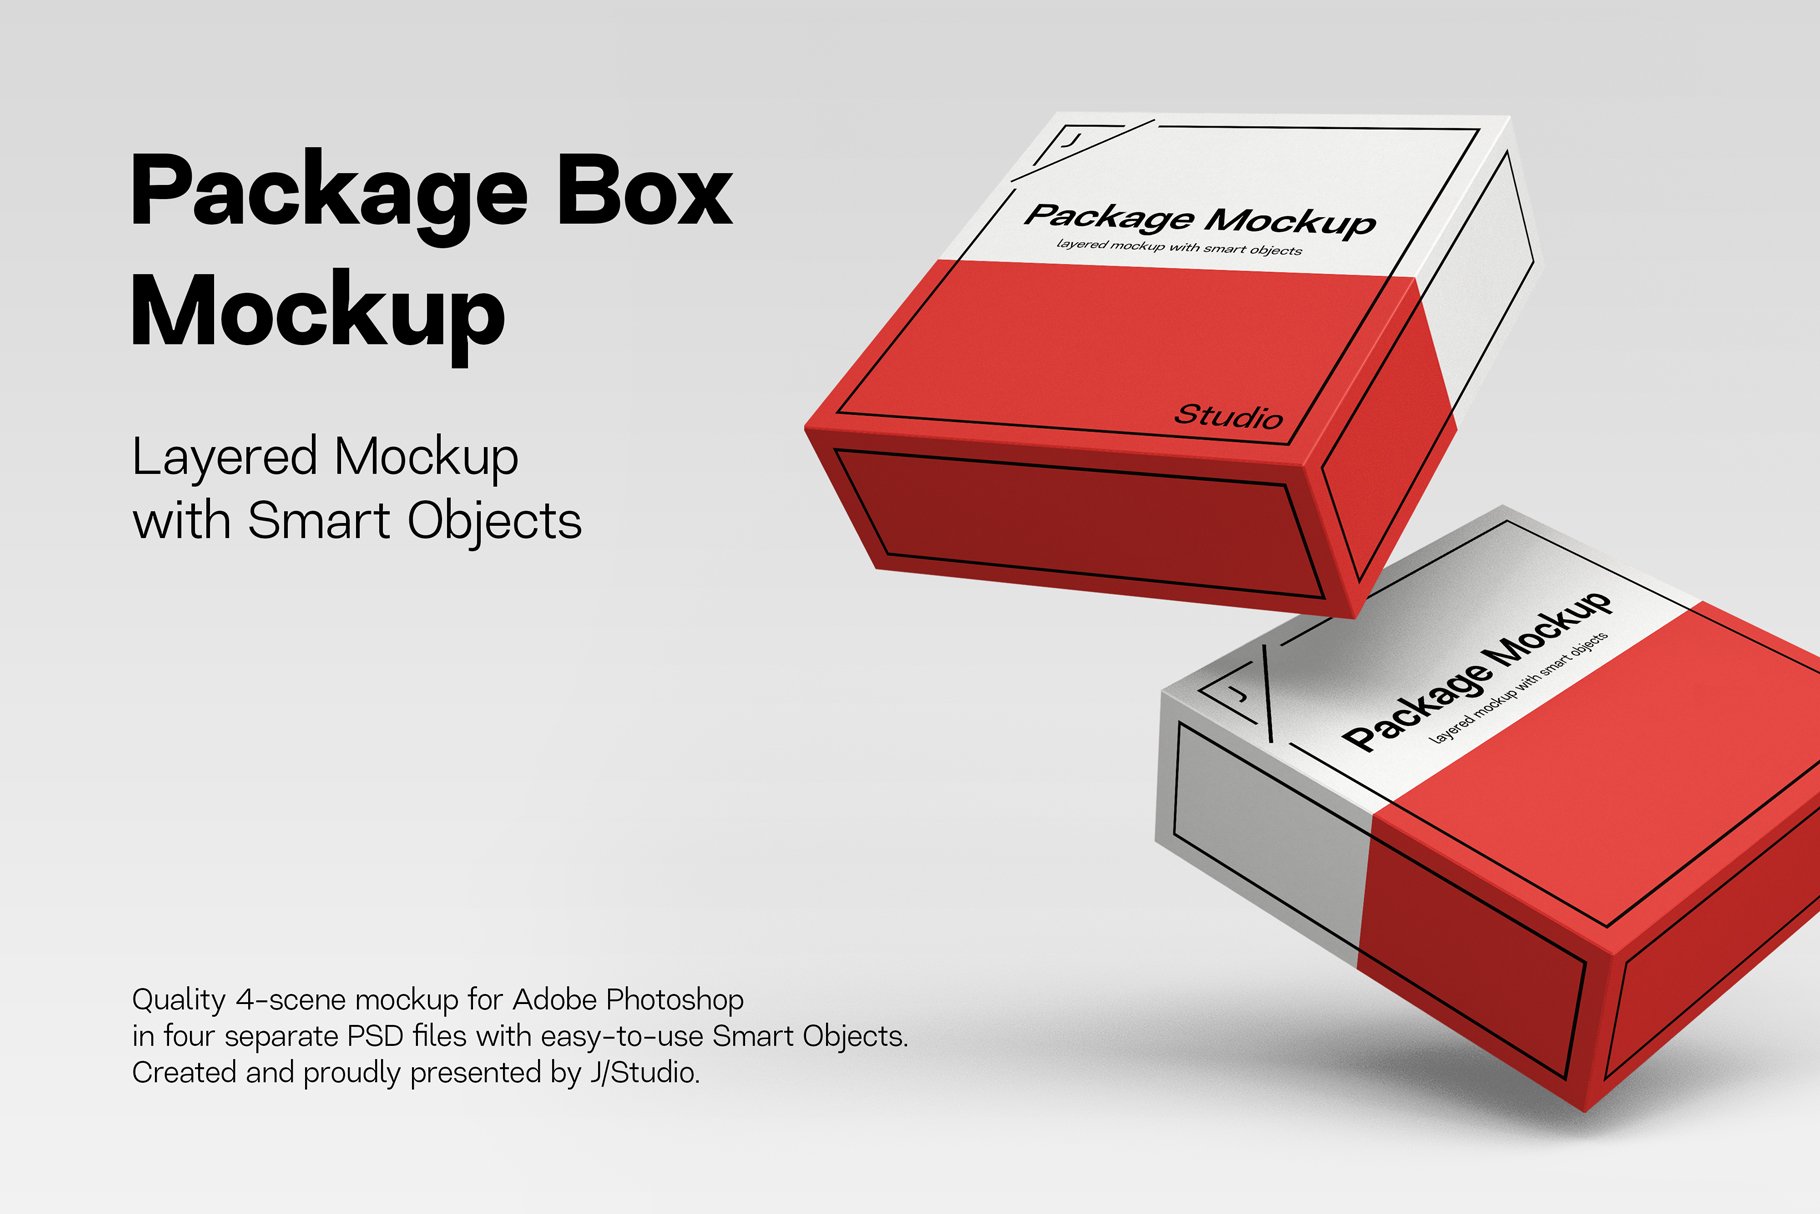 Package Box Mockup Scene Set cover image.